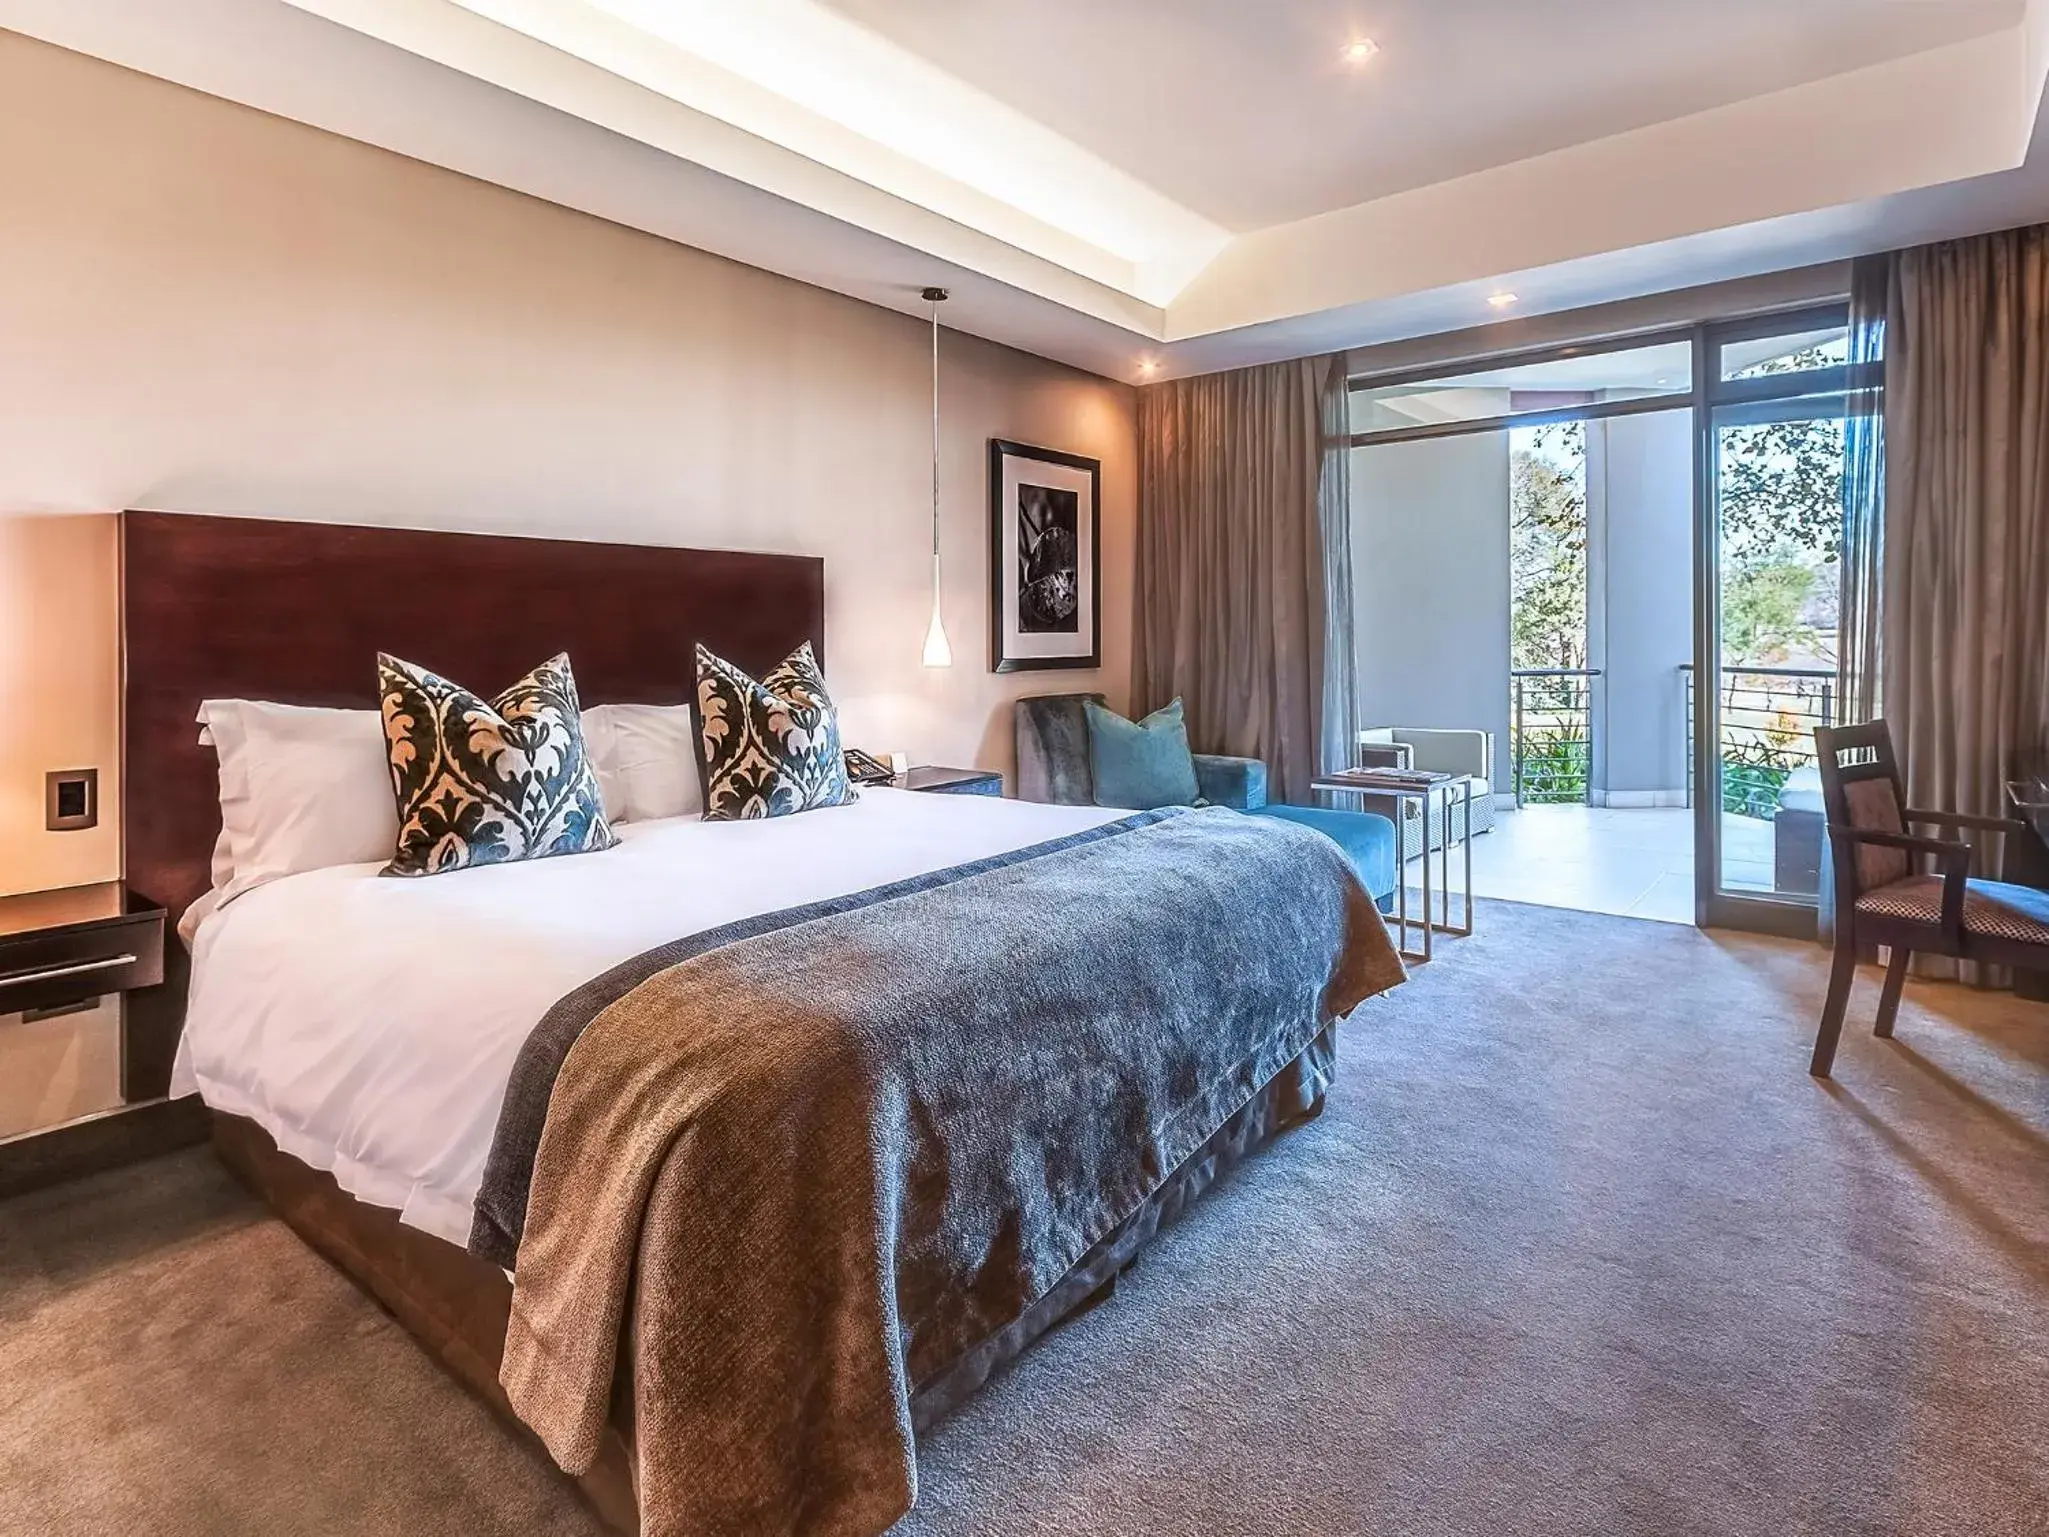 Luxury Double Room - single occupancy in The Fairway Hotel, Spa & Golf Resort